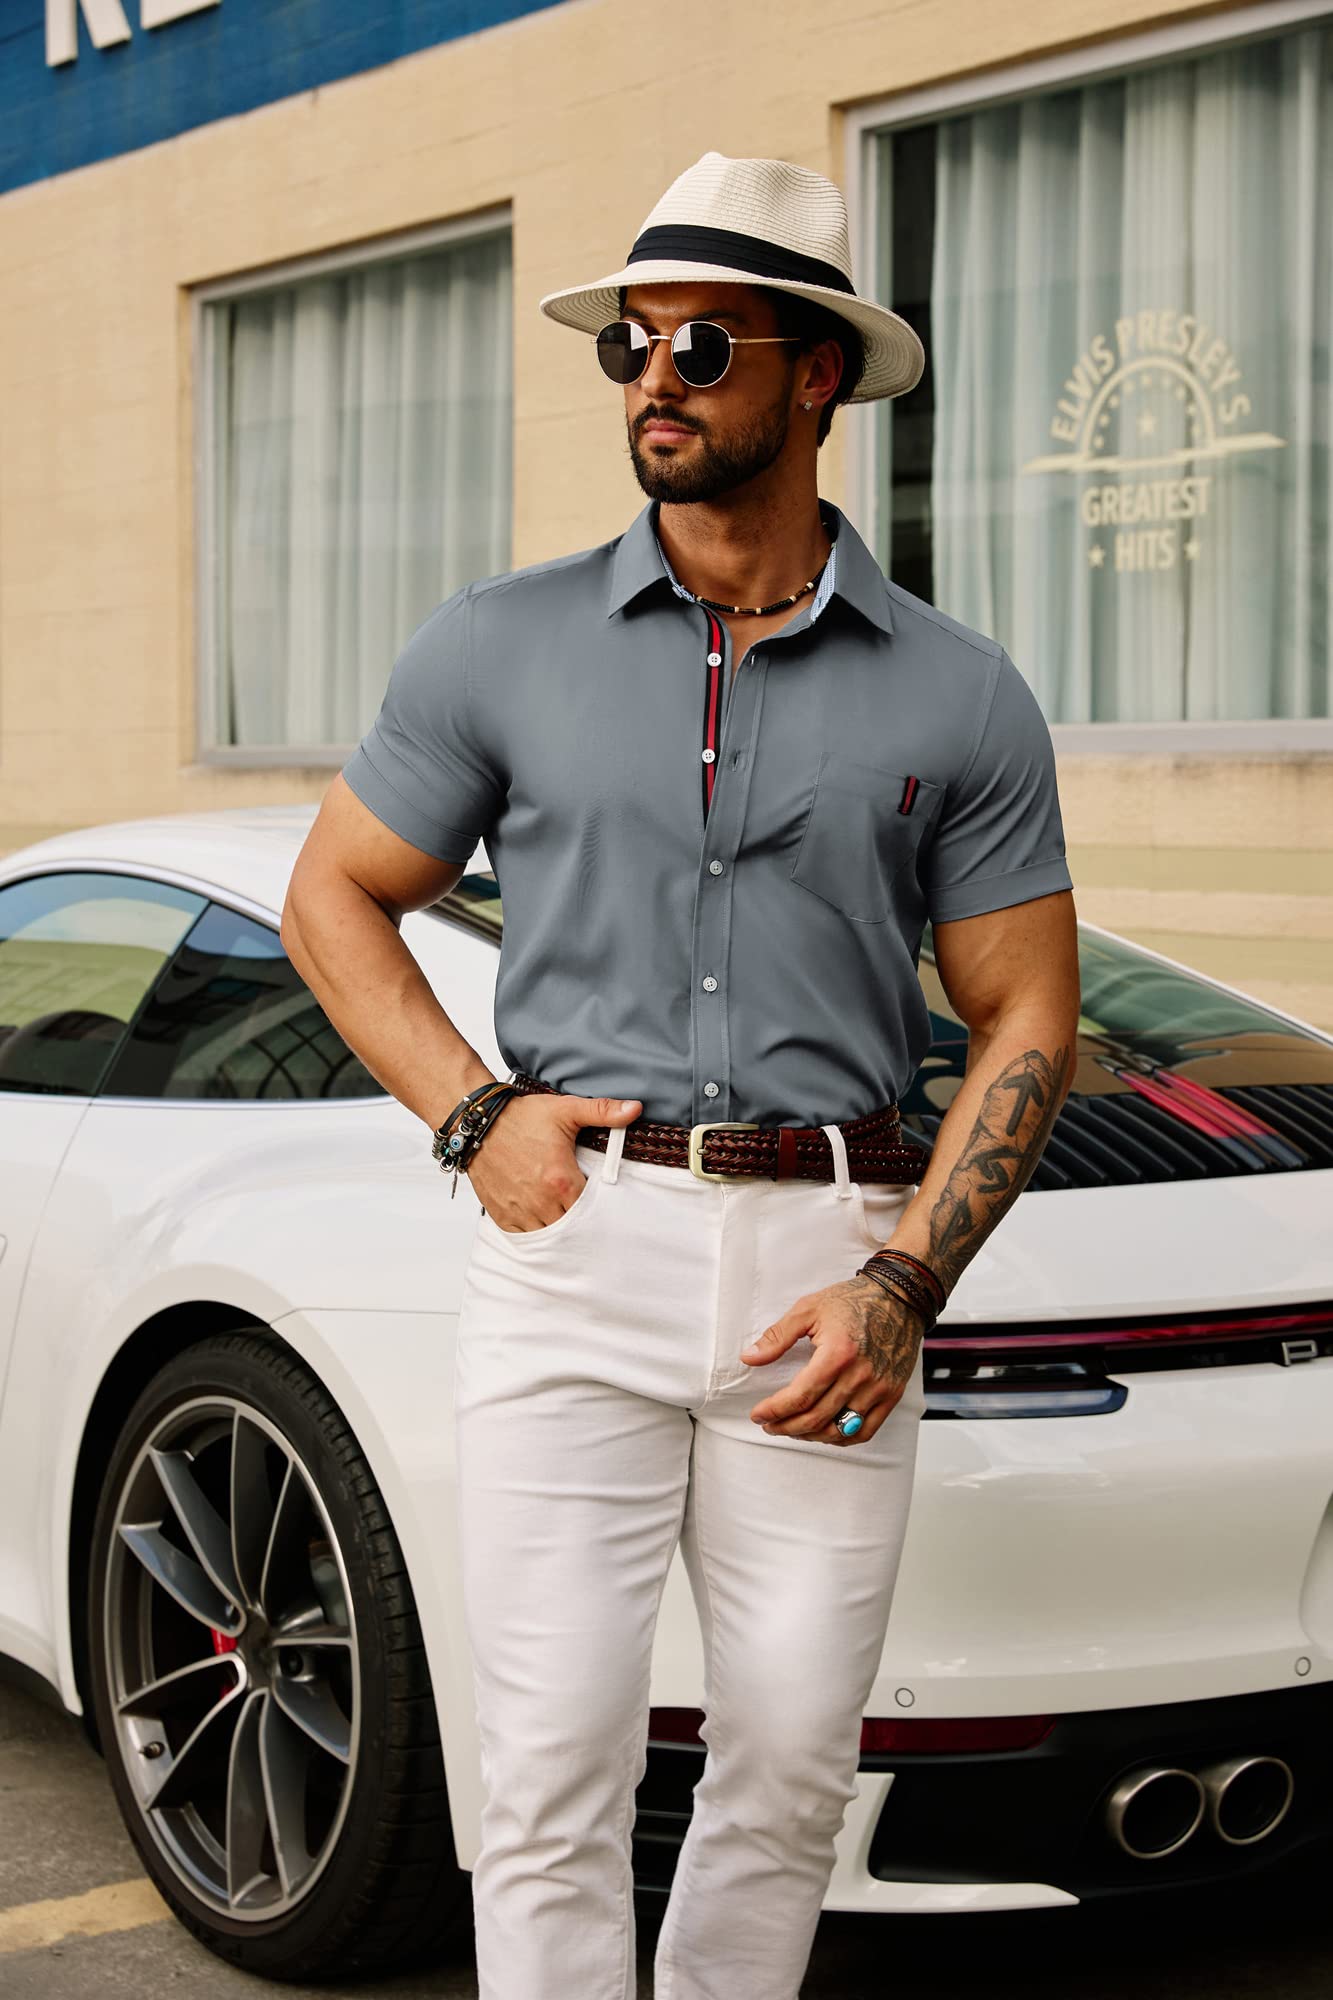 PJ PAUL JONES Men's Casual Dress Shirts Wrinkle-Free Short Sleeve Business Button Down Bamboo Oxford Shirt